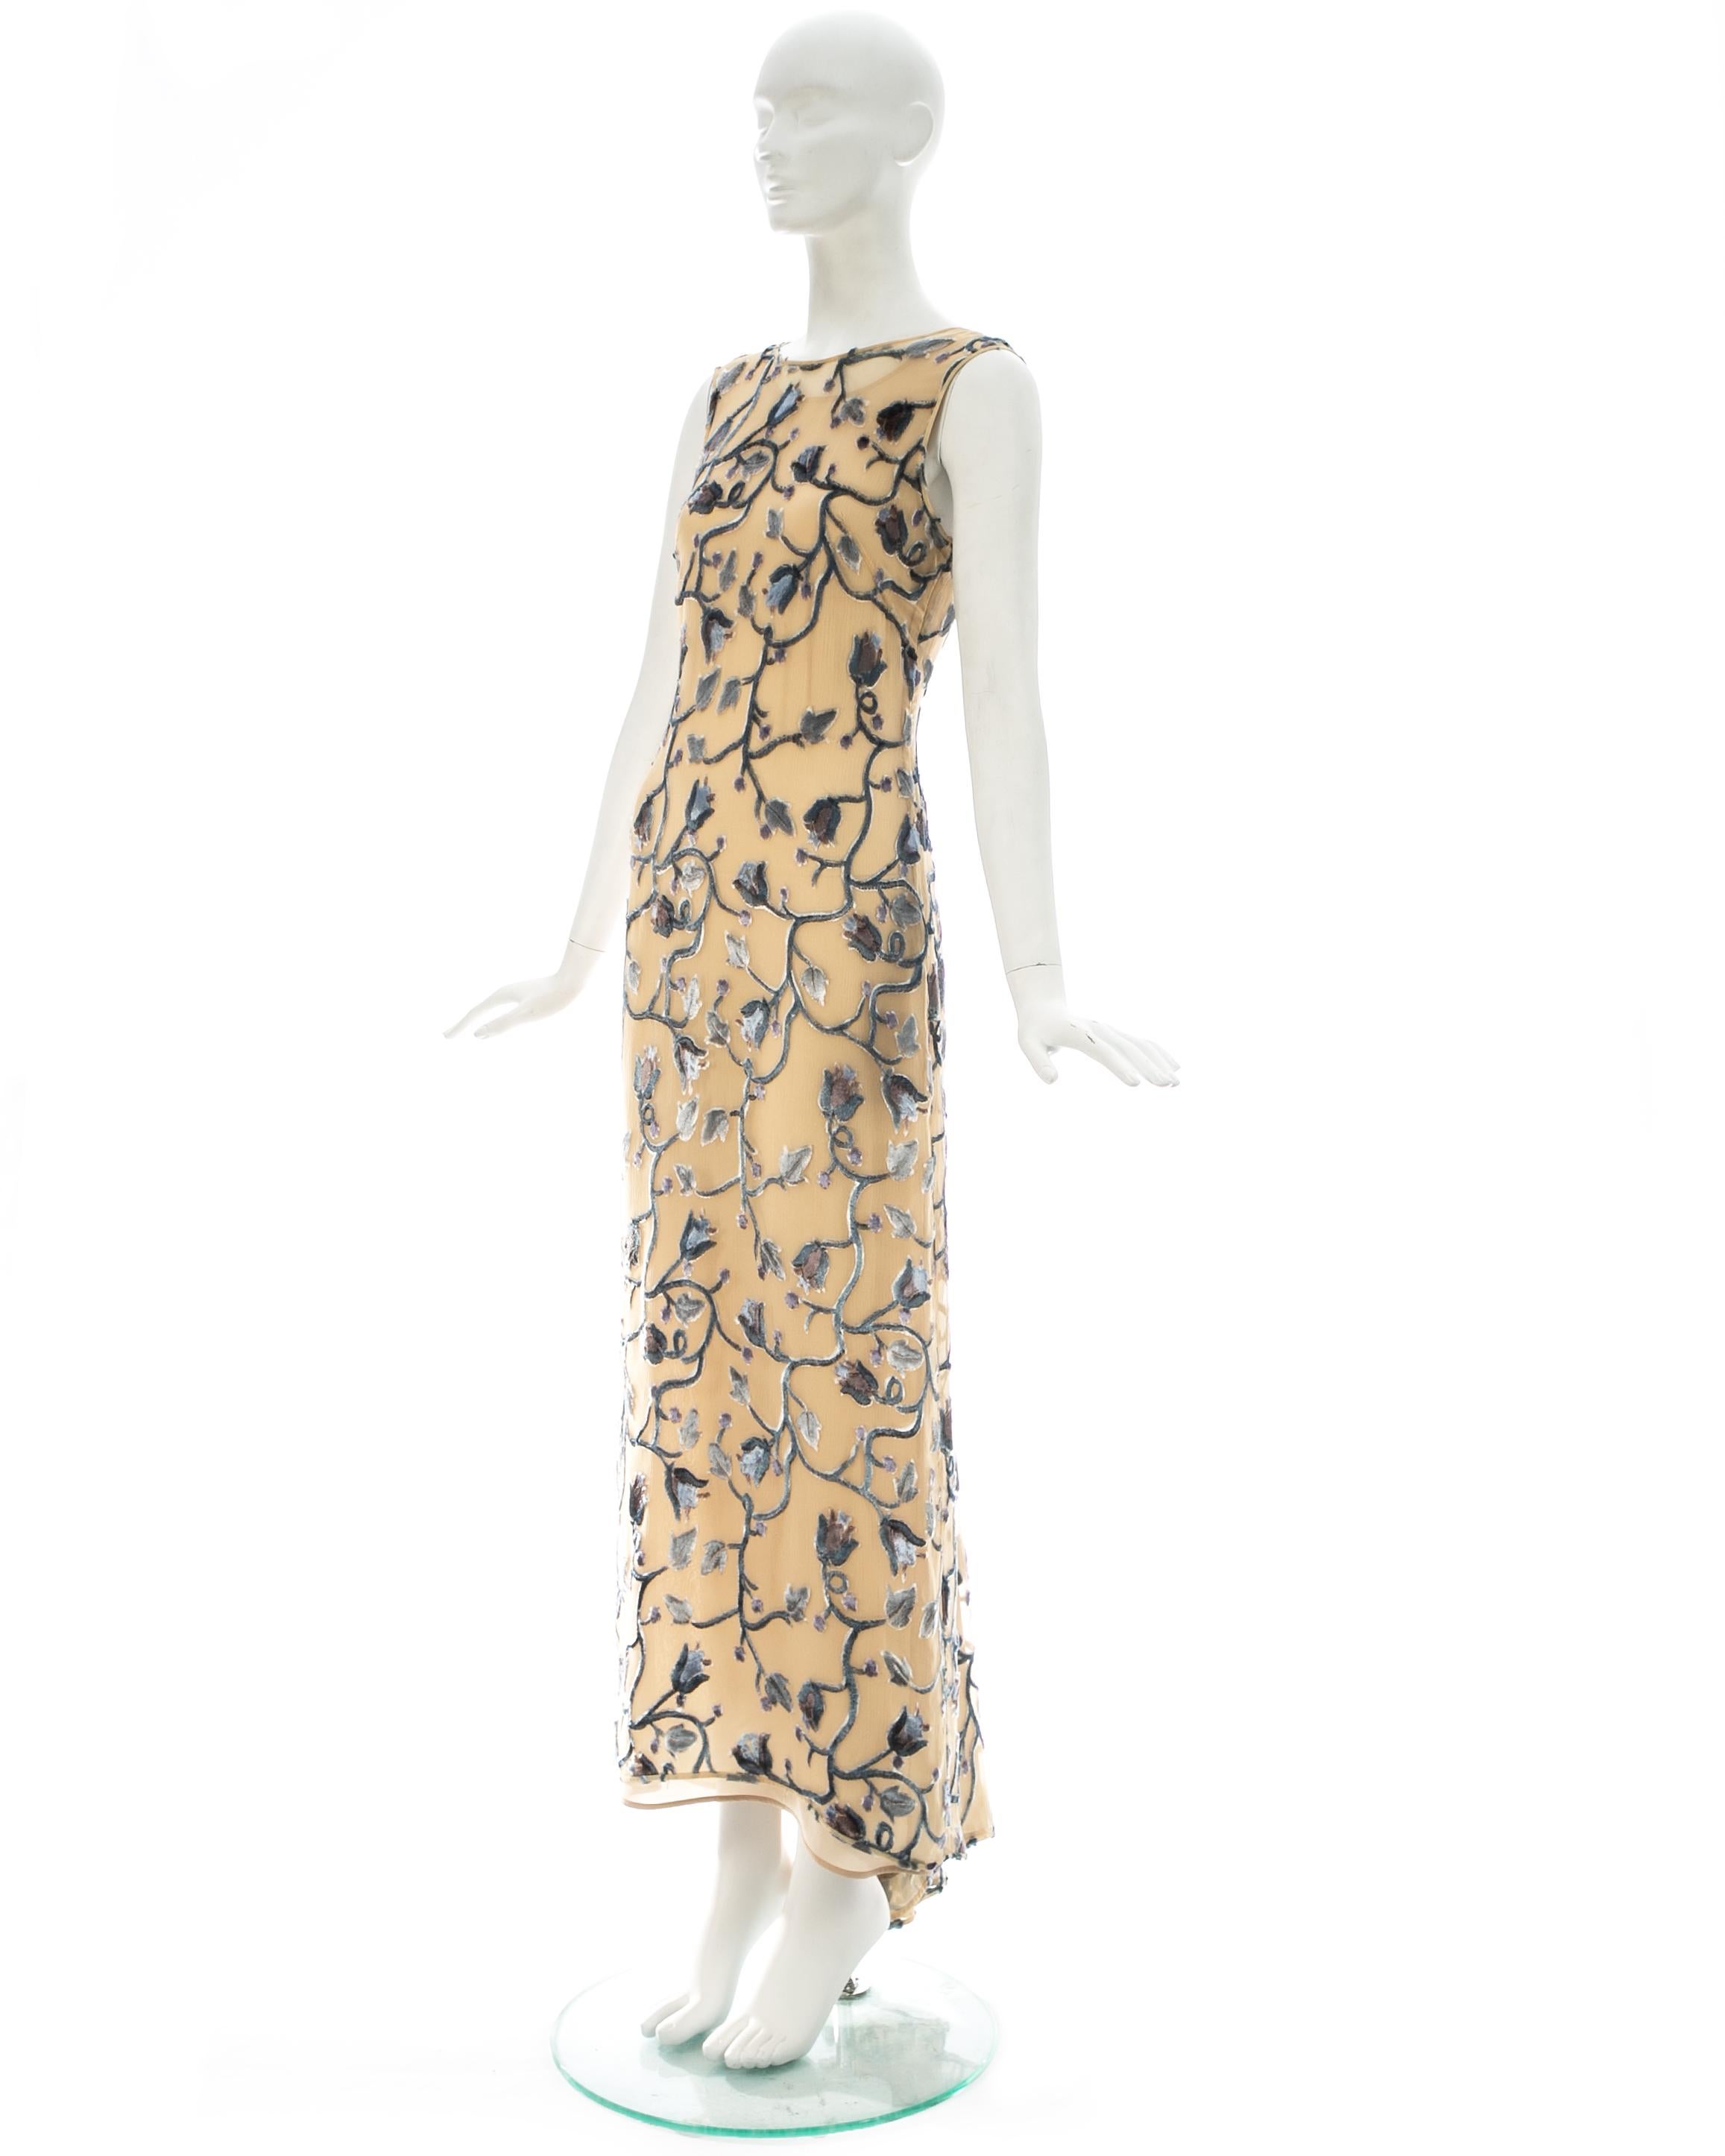 Women's Prada ivory silk devoré floral maxi dress with train and slip dress, ss 1997